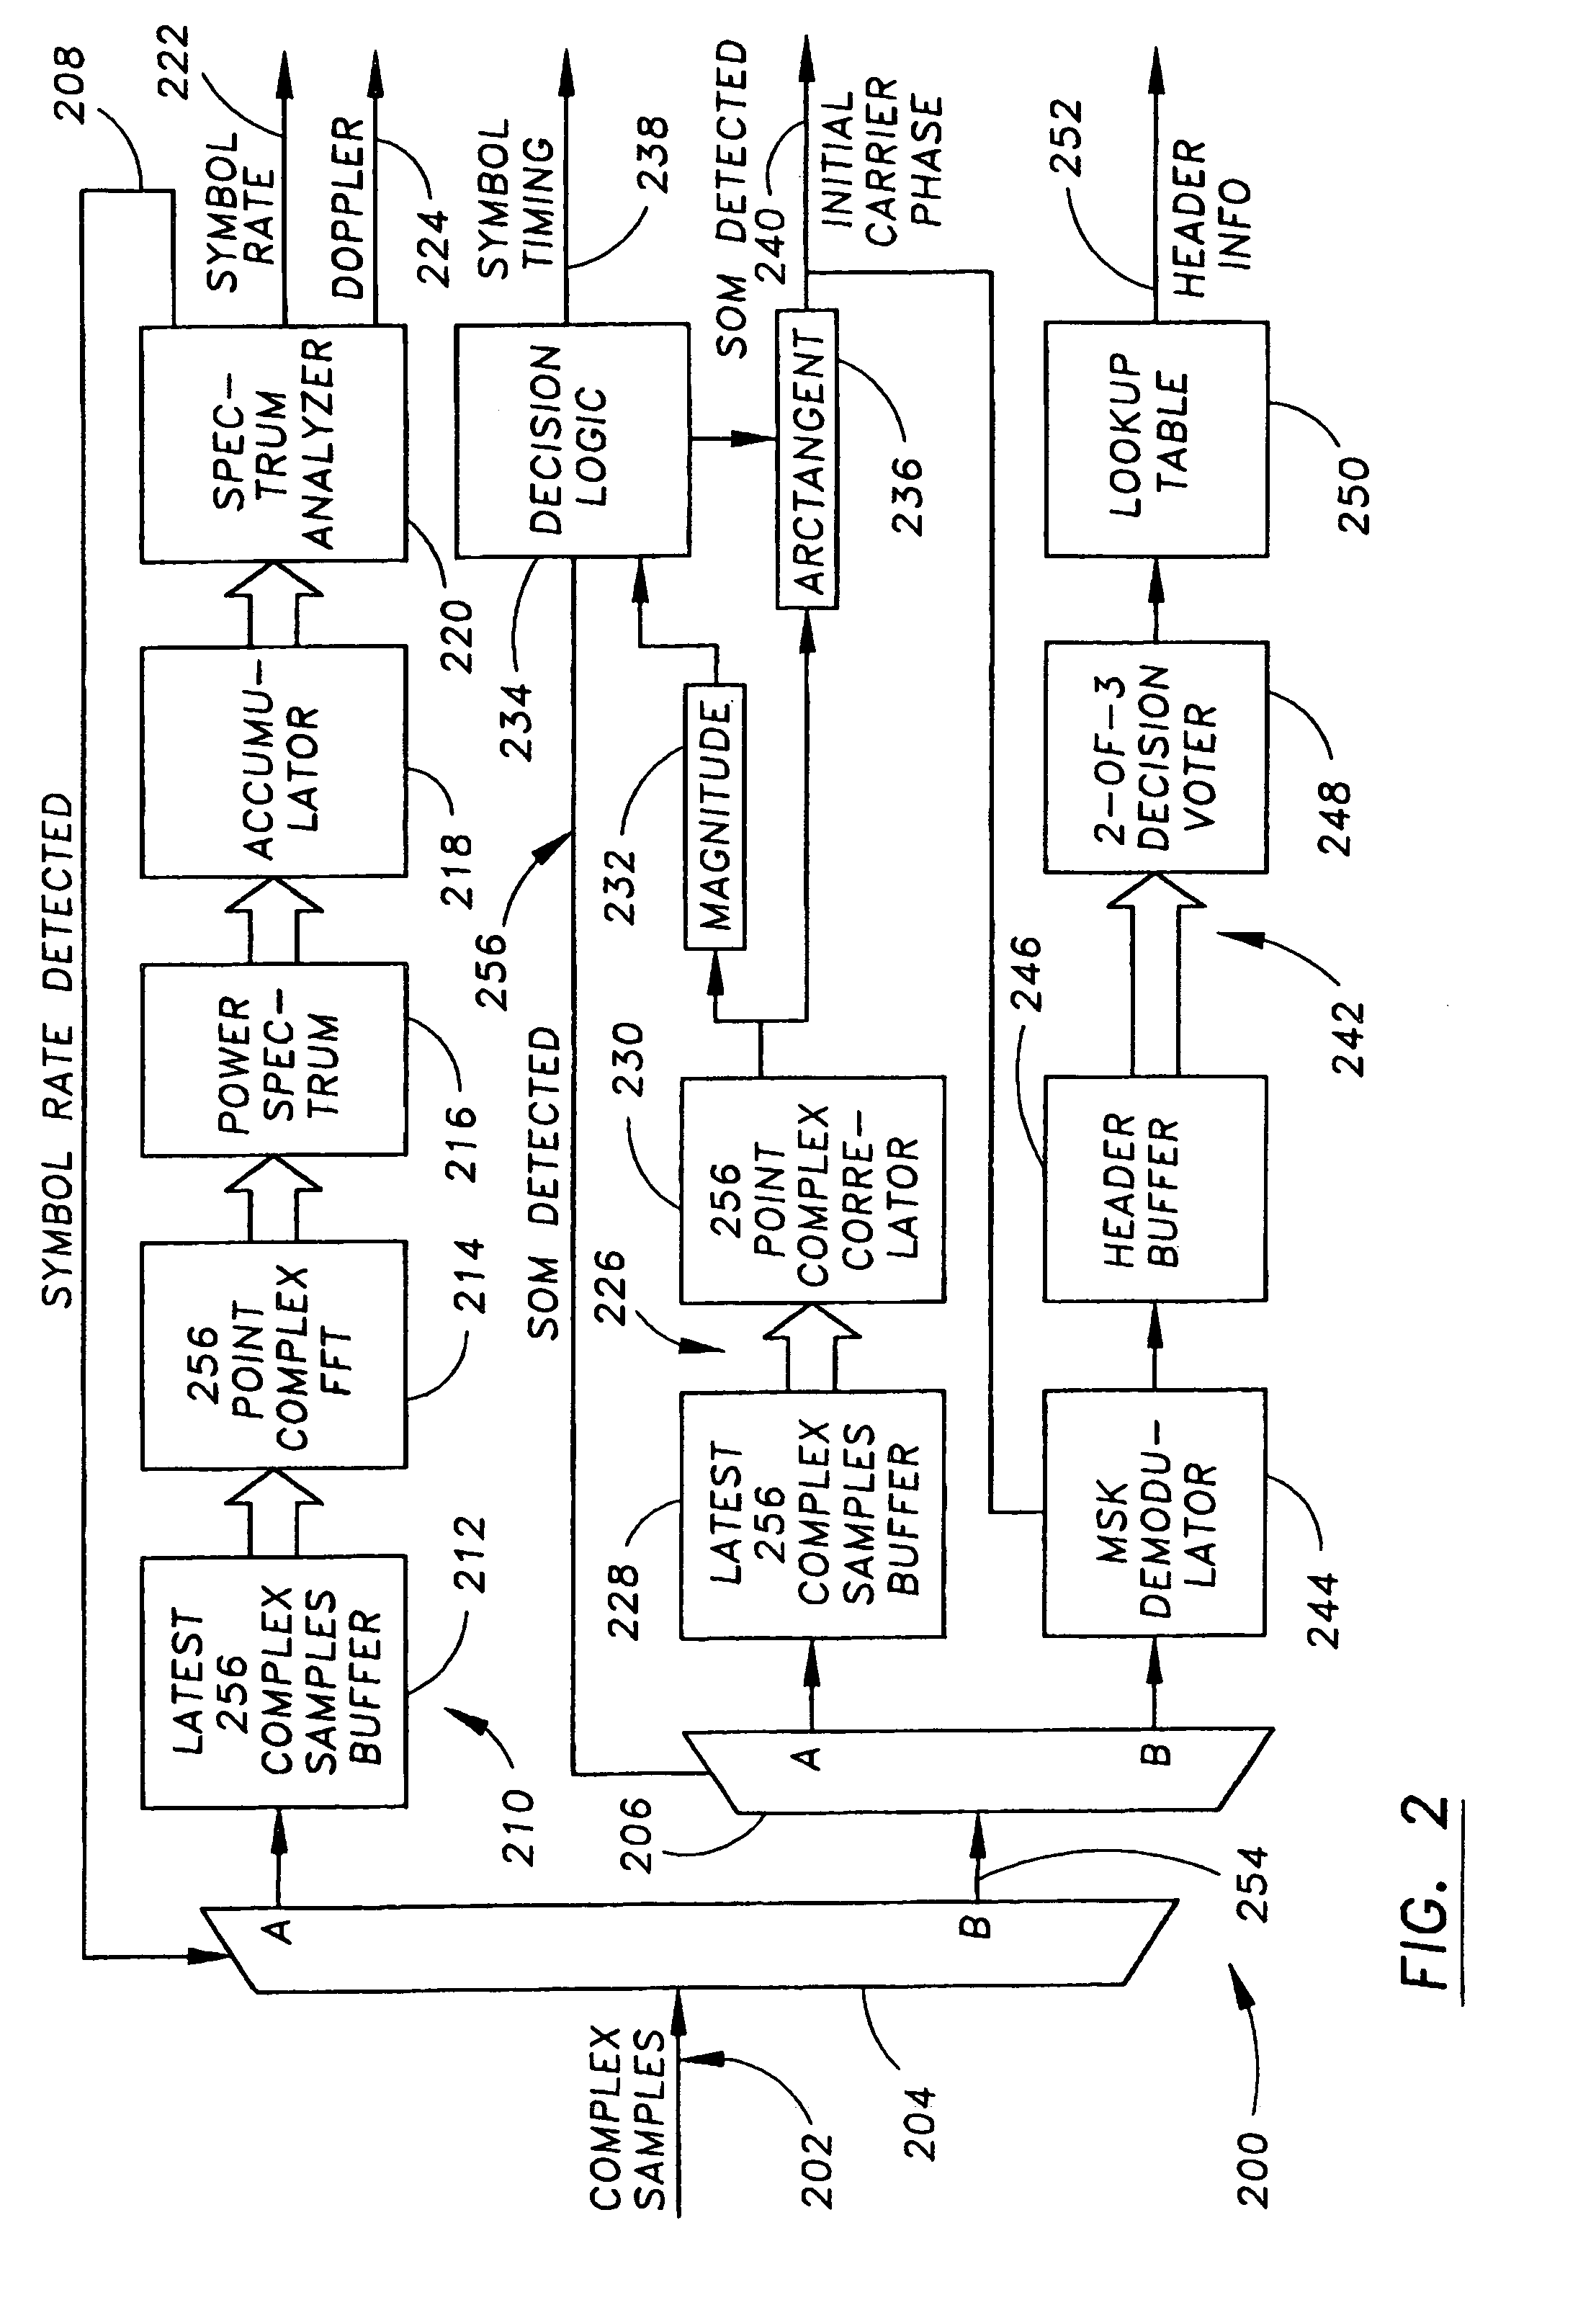 Acquisition of a continuous-phase modulation waveform